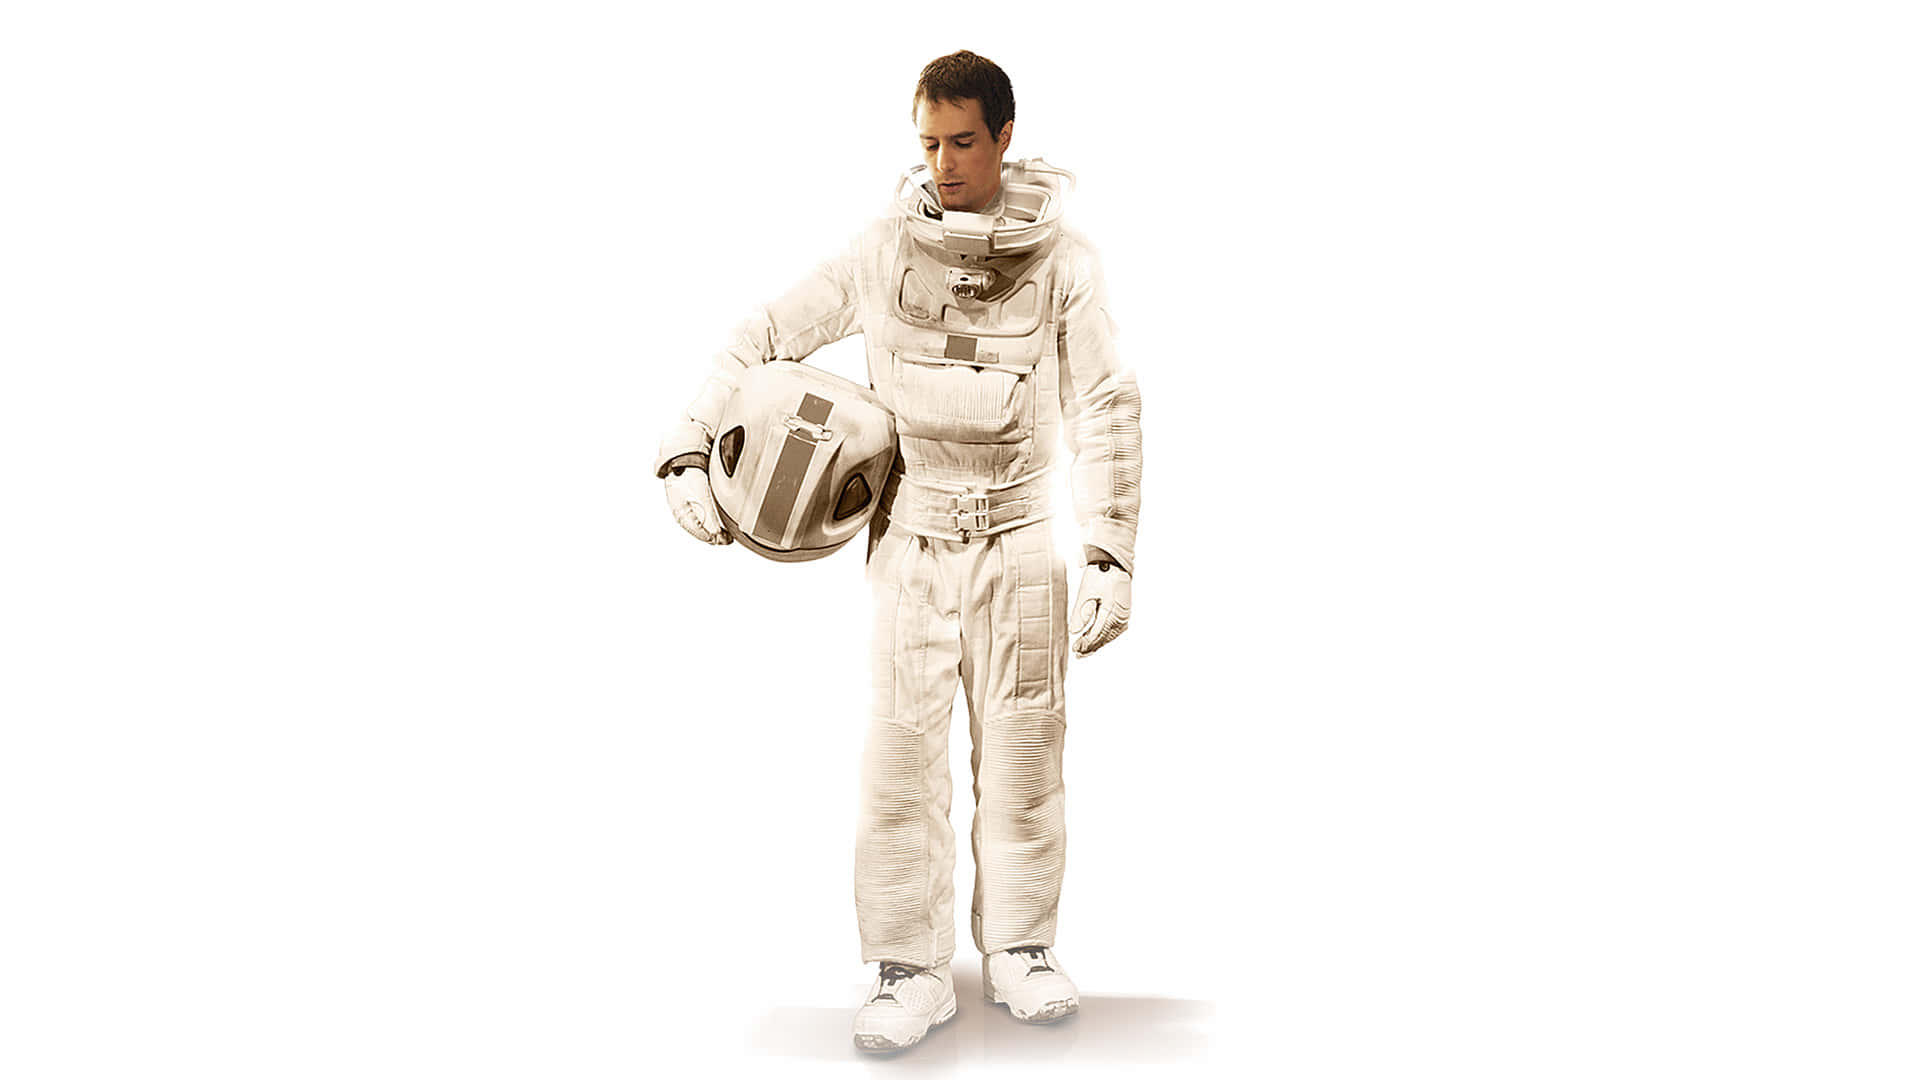 Sam Rockwell Astronaut Movie Moon 2009 Wallpaper